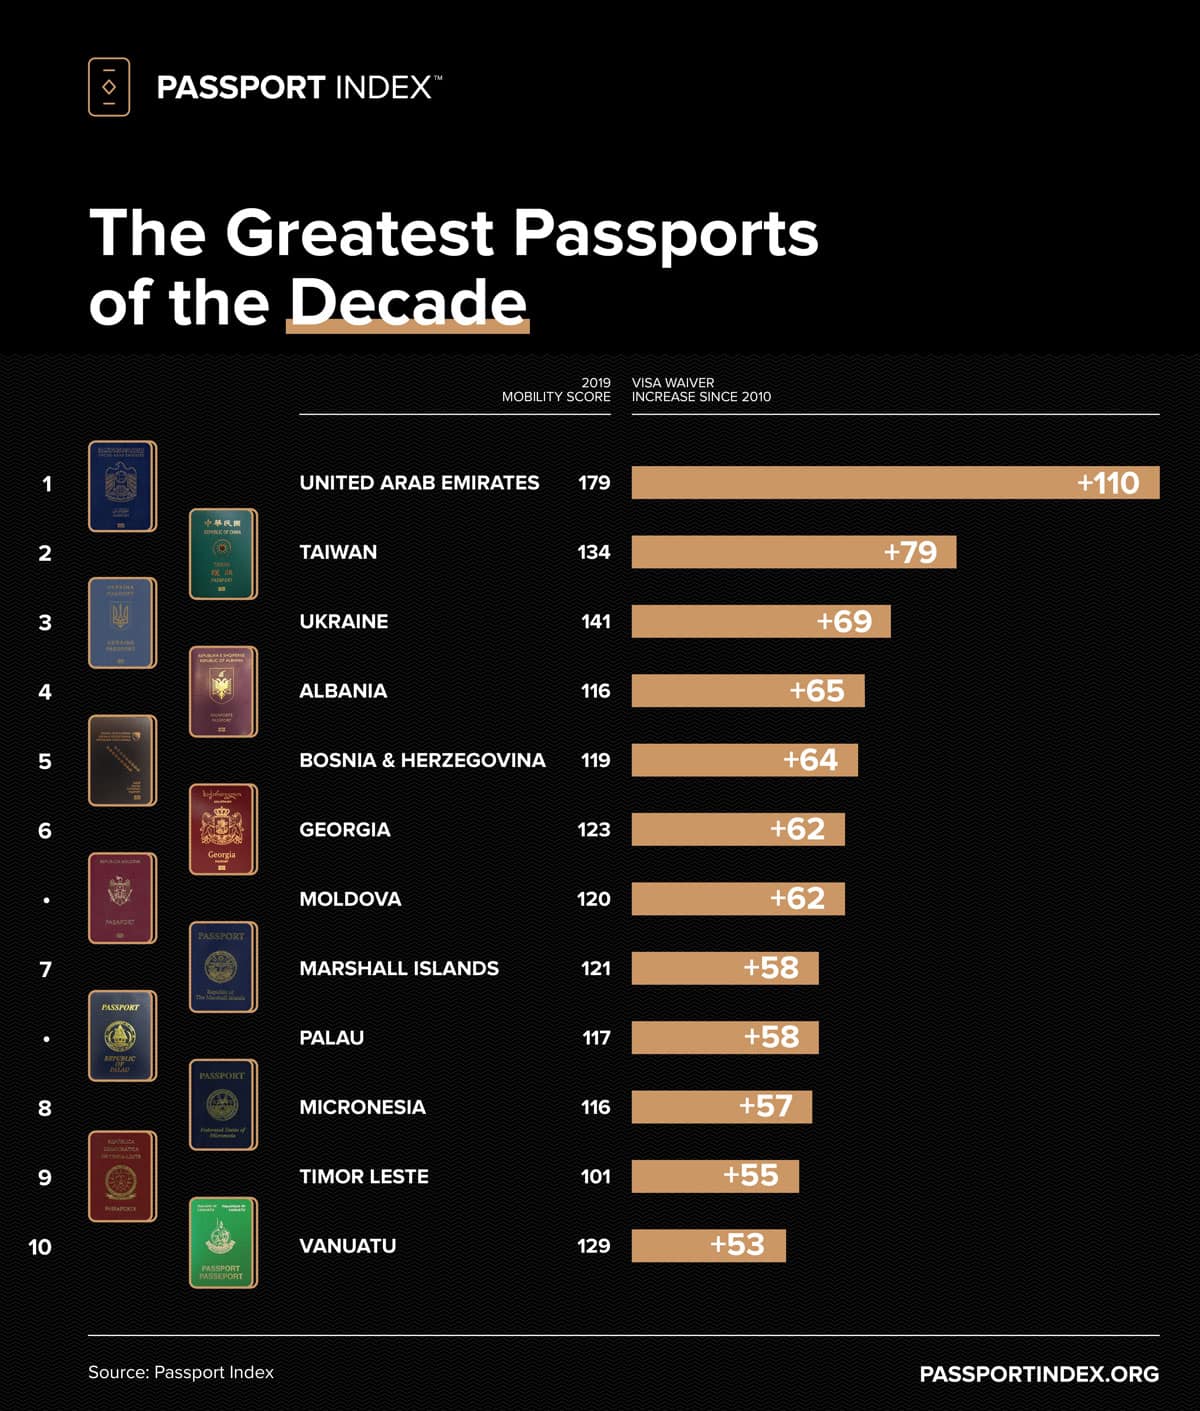 Top Ten world's most powerful passports